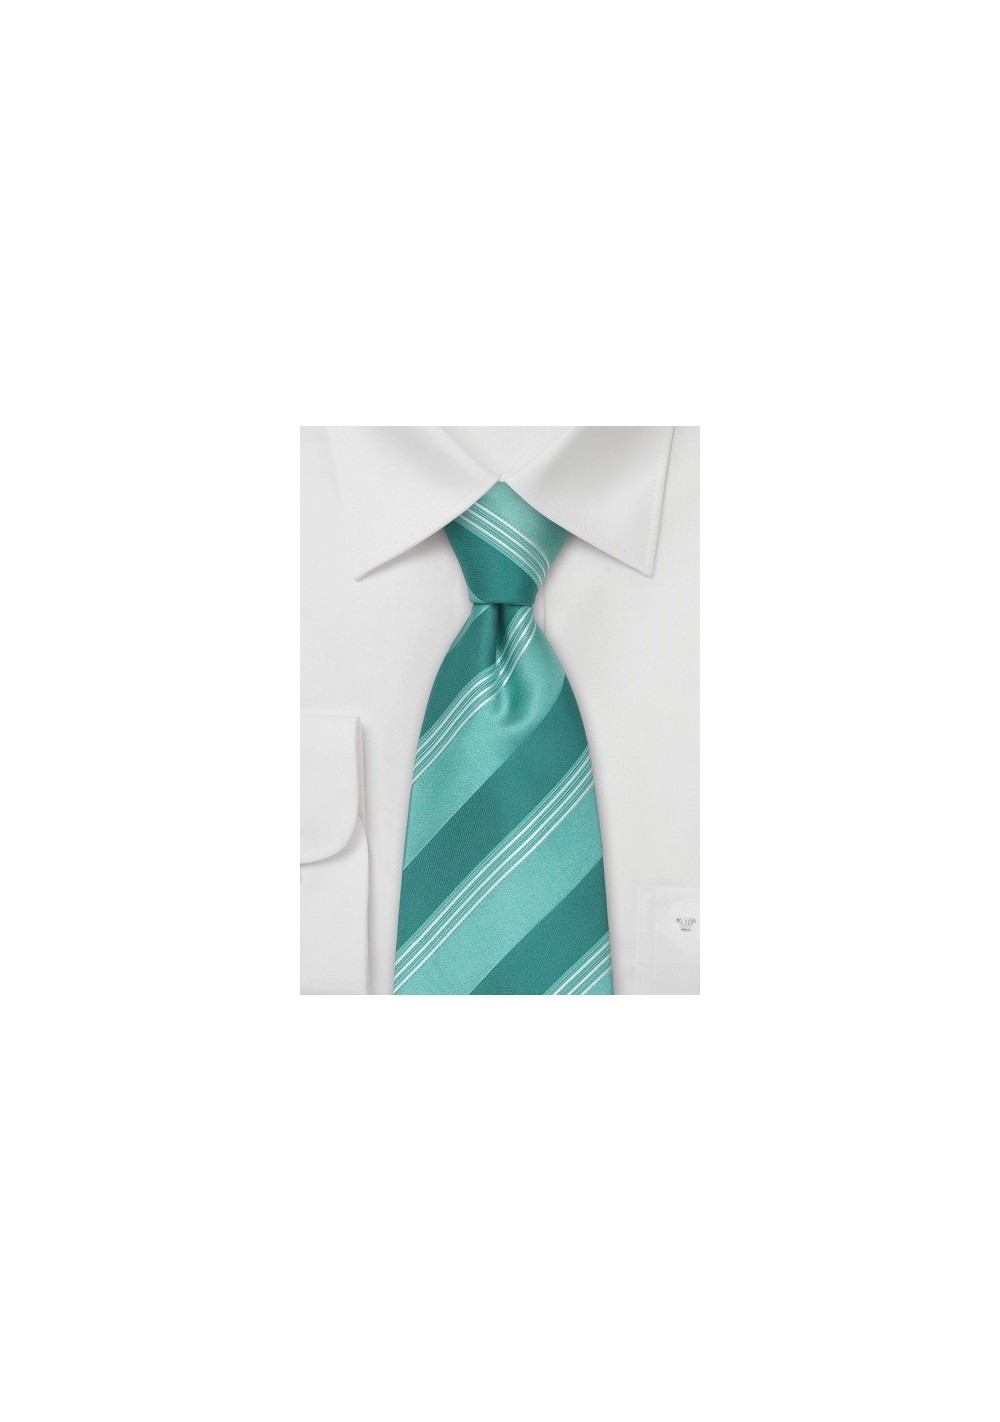 Seafoam Green Striped Kids Tie